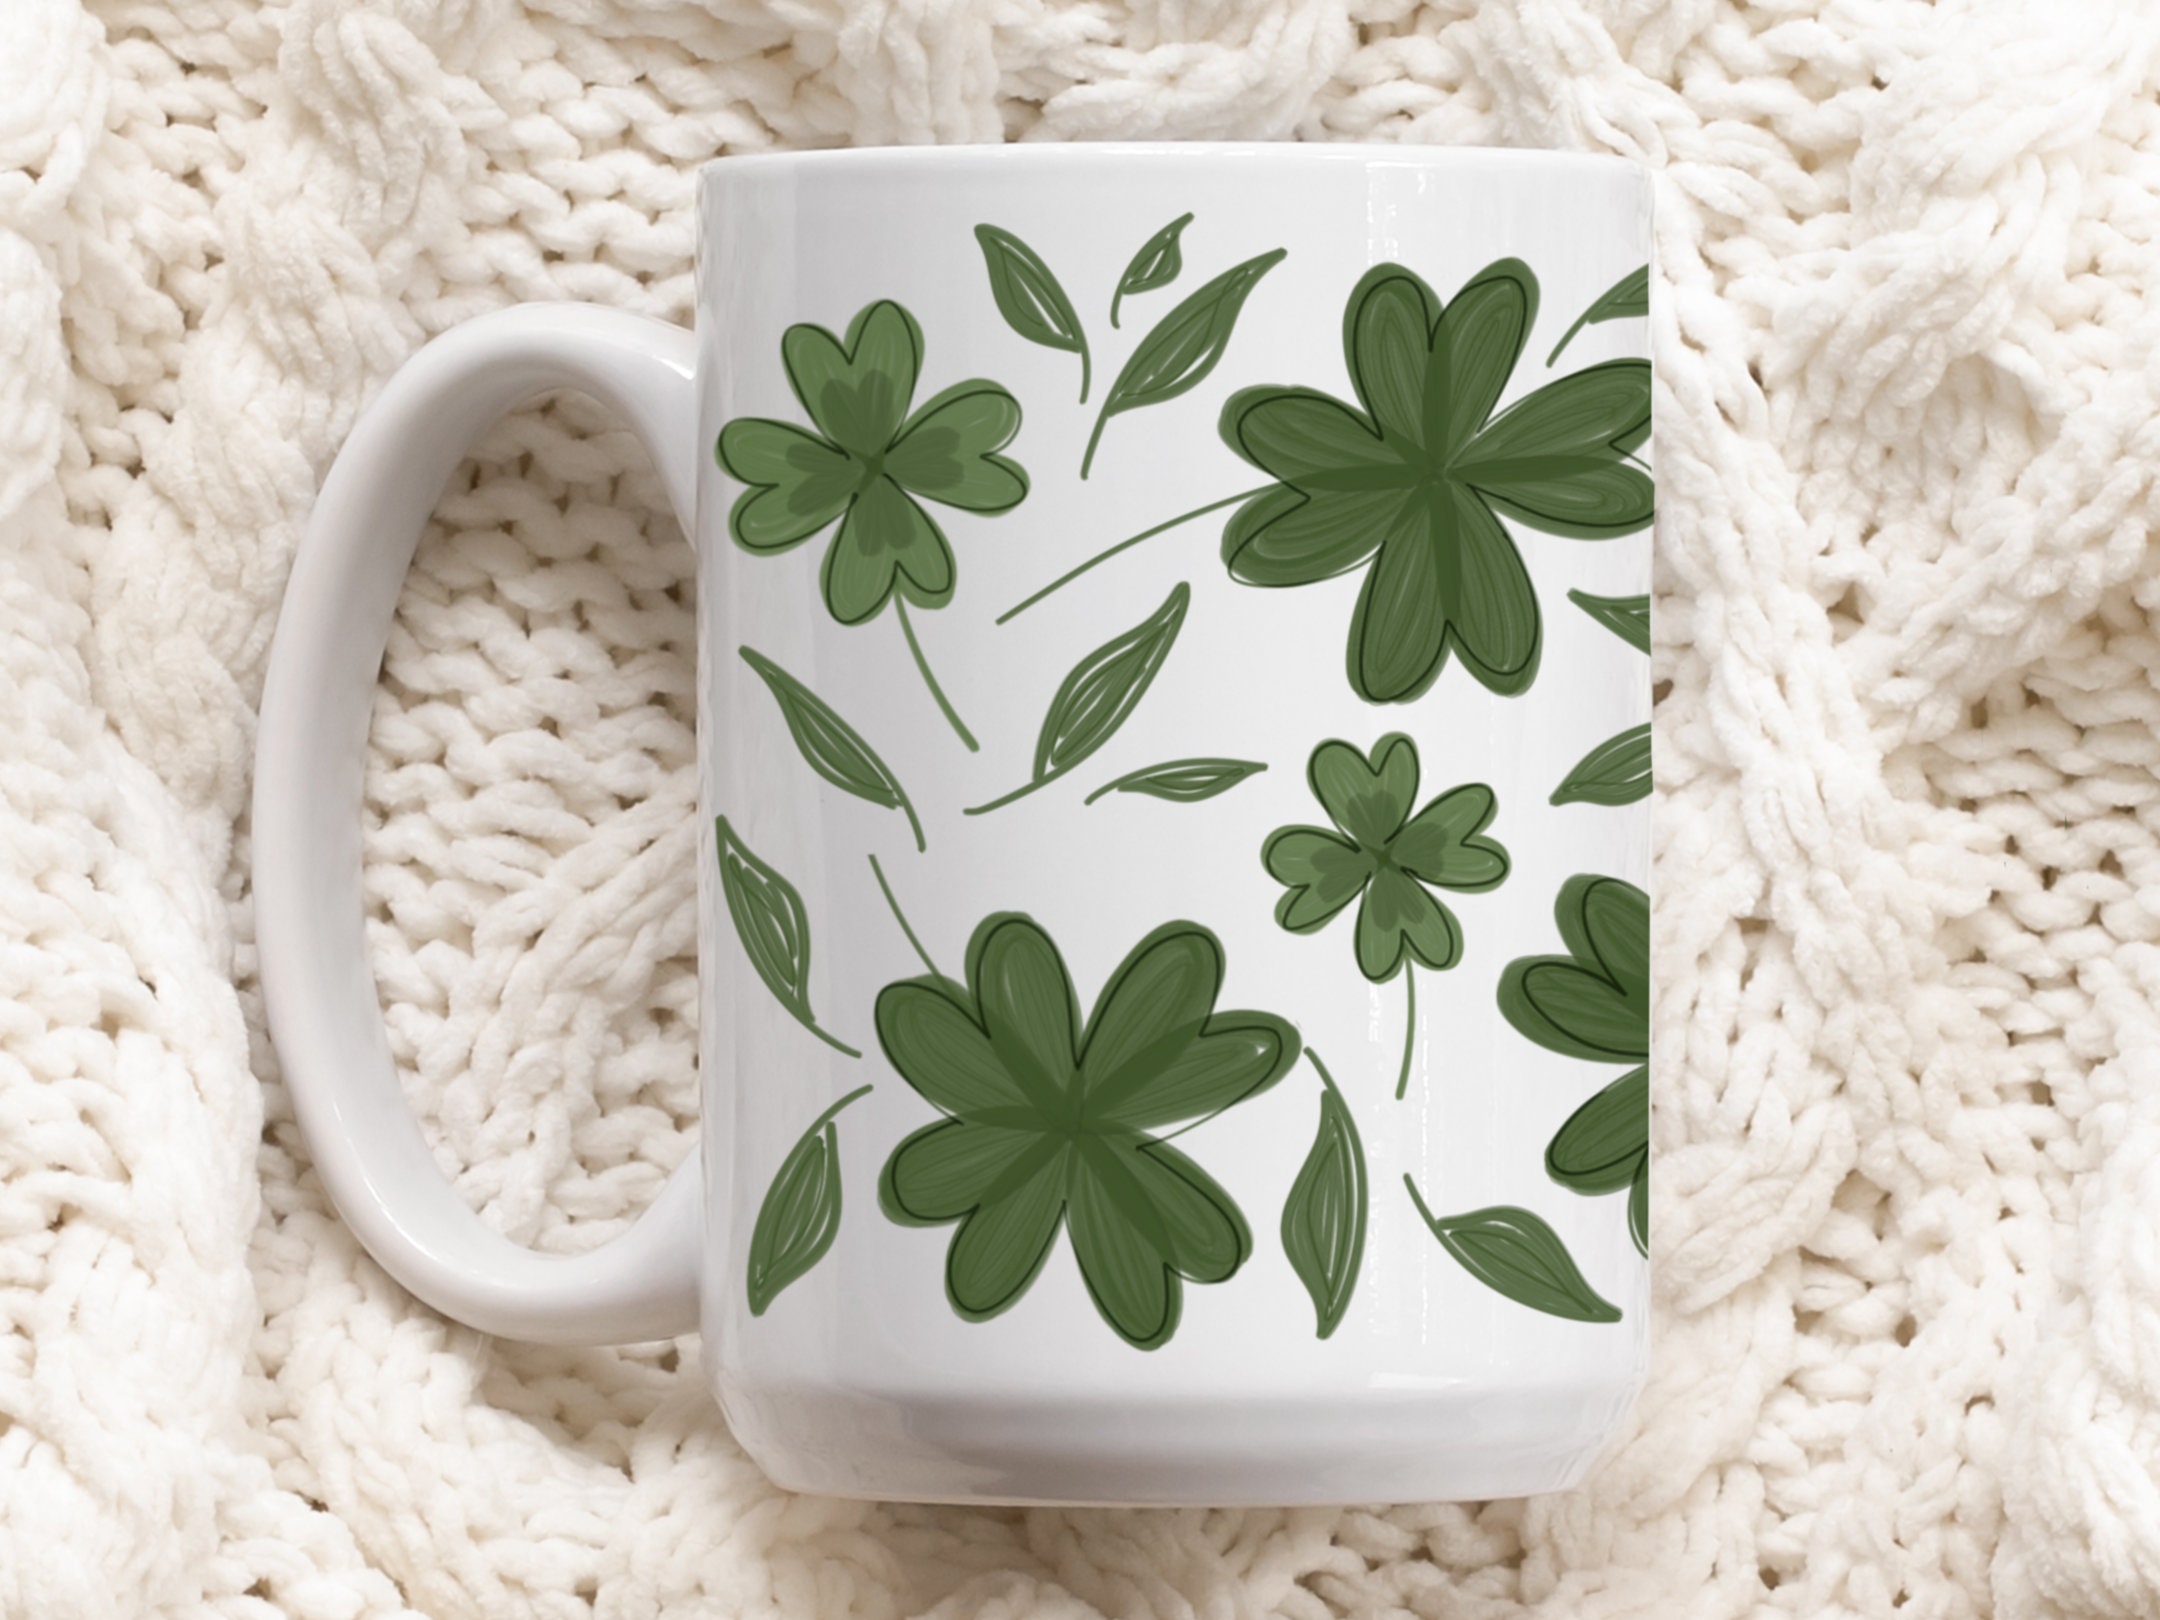 Irish Shamrock Spiral Ceramic Mug